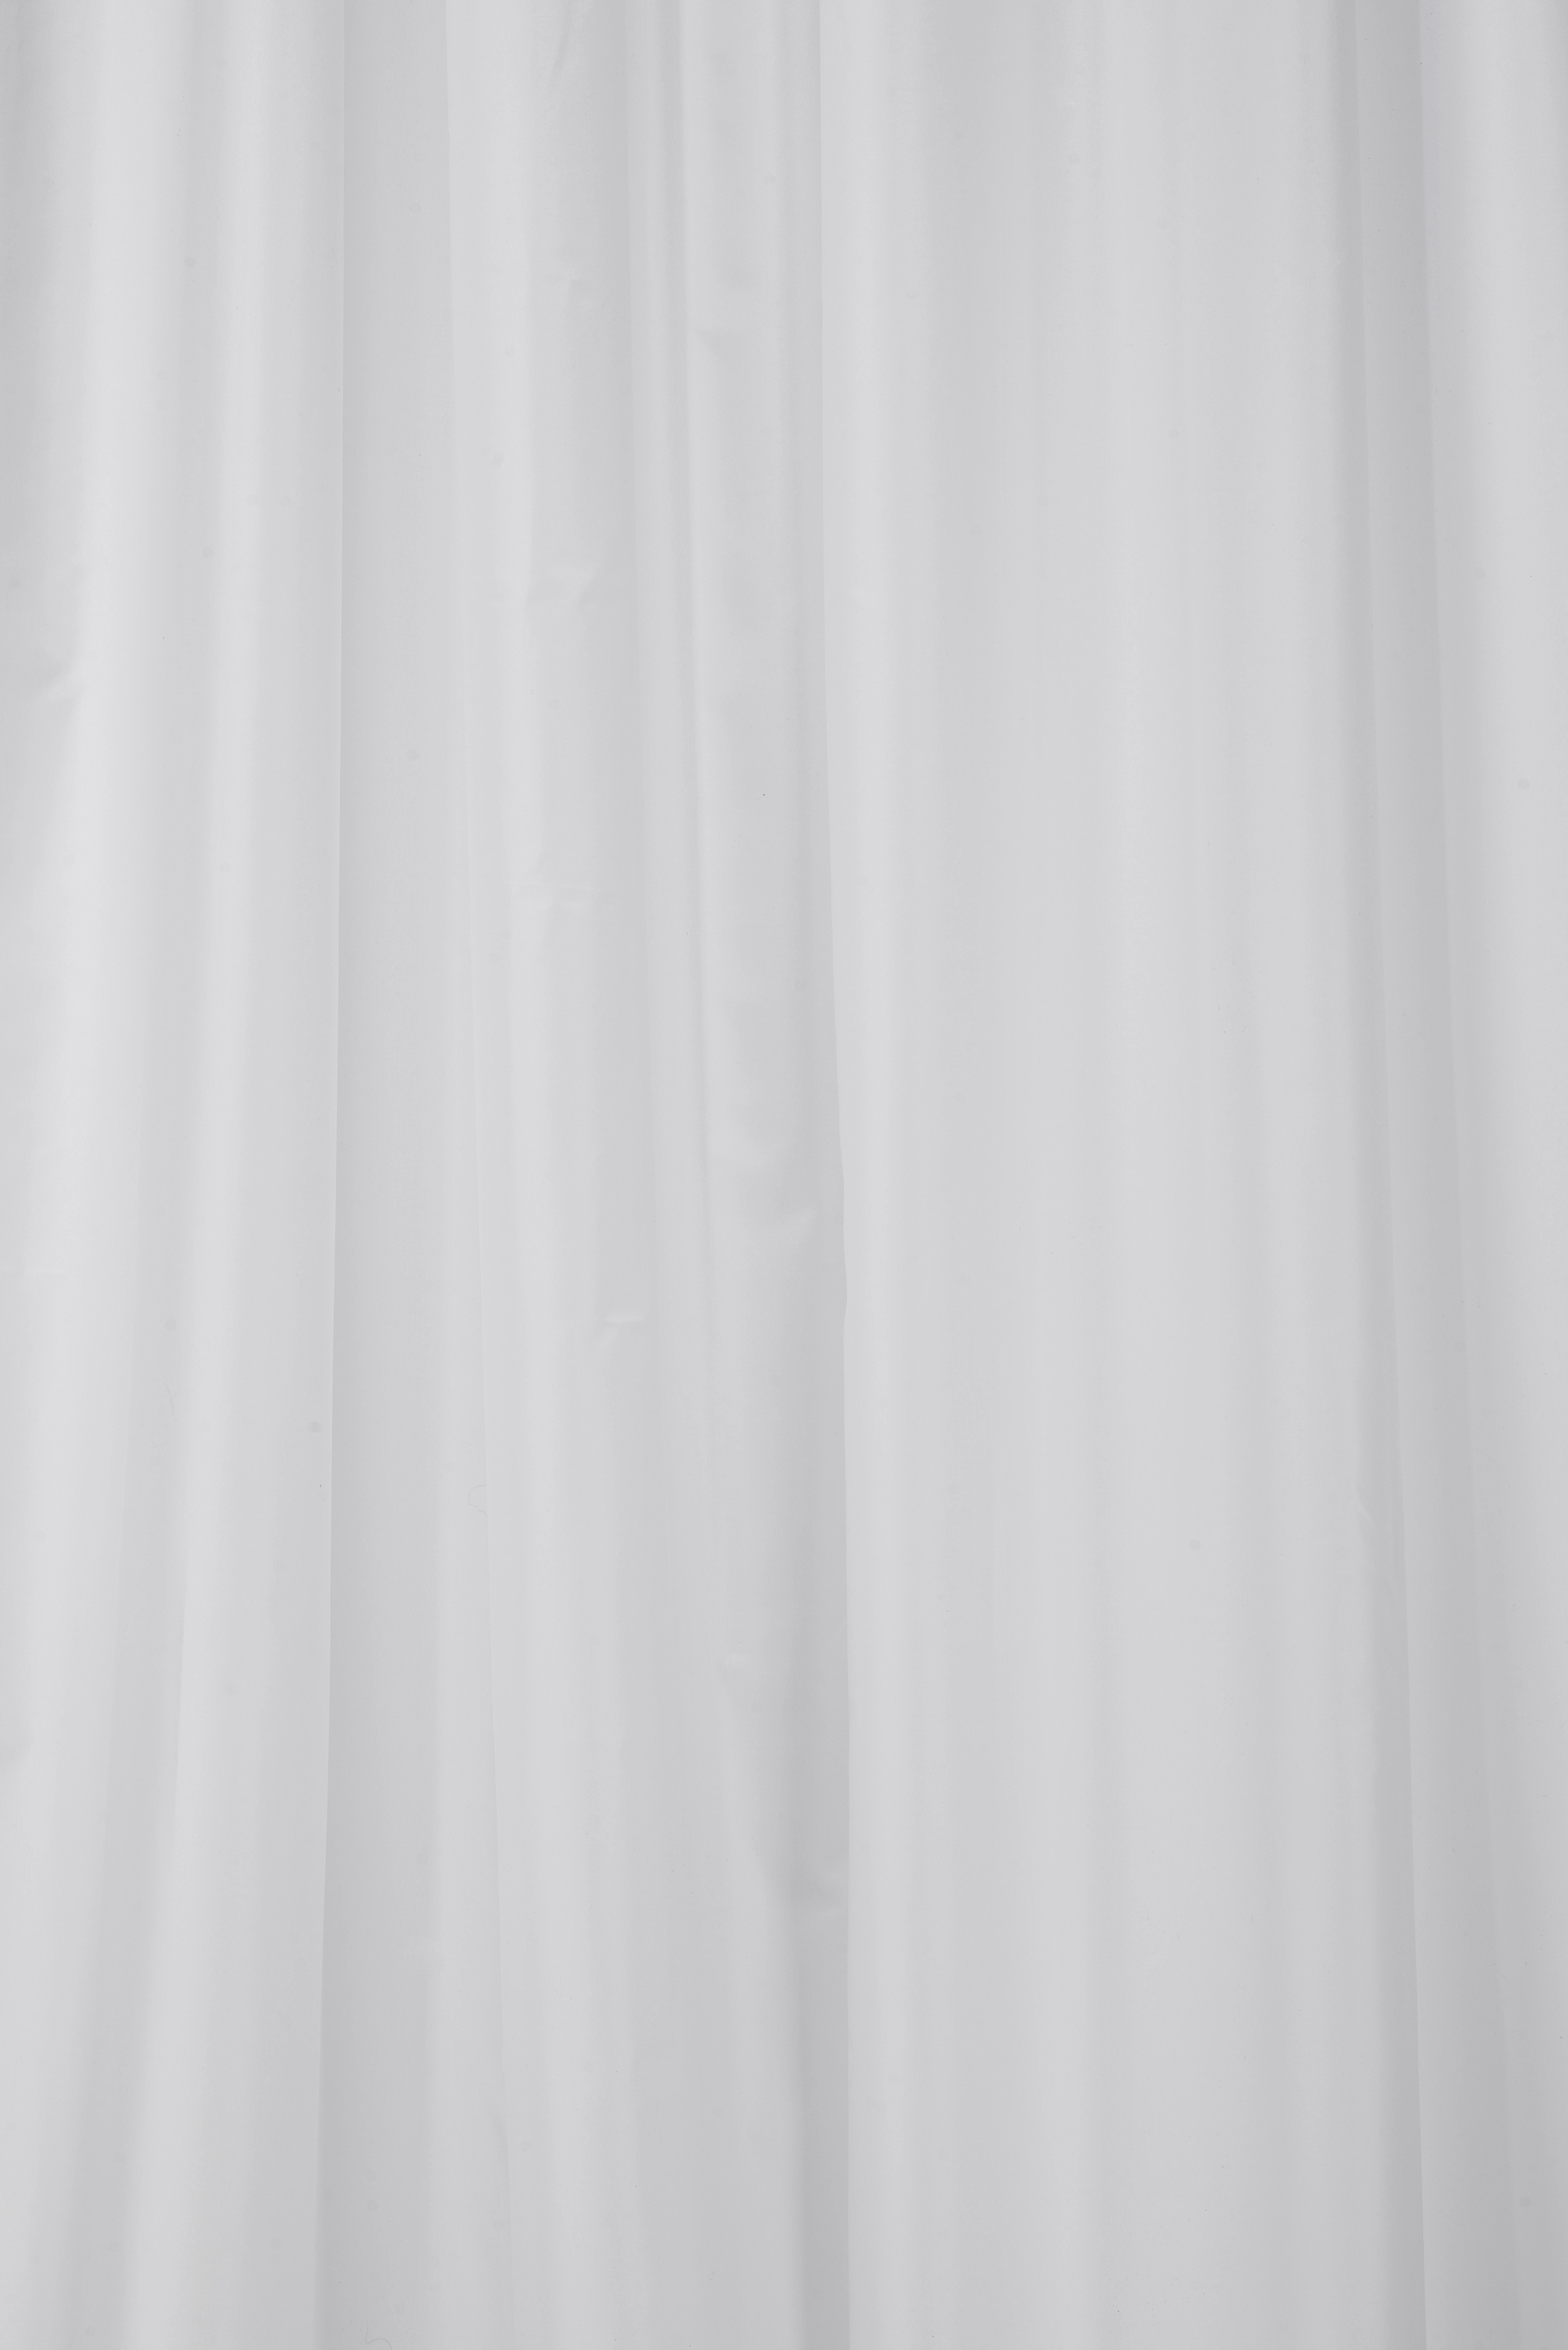 Image of Croydex Hygiene 'n' Clean Bathroom Shower Curtain - White